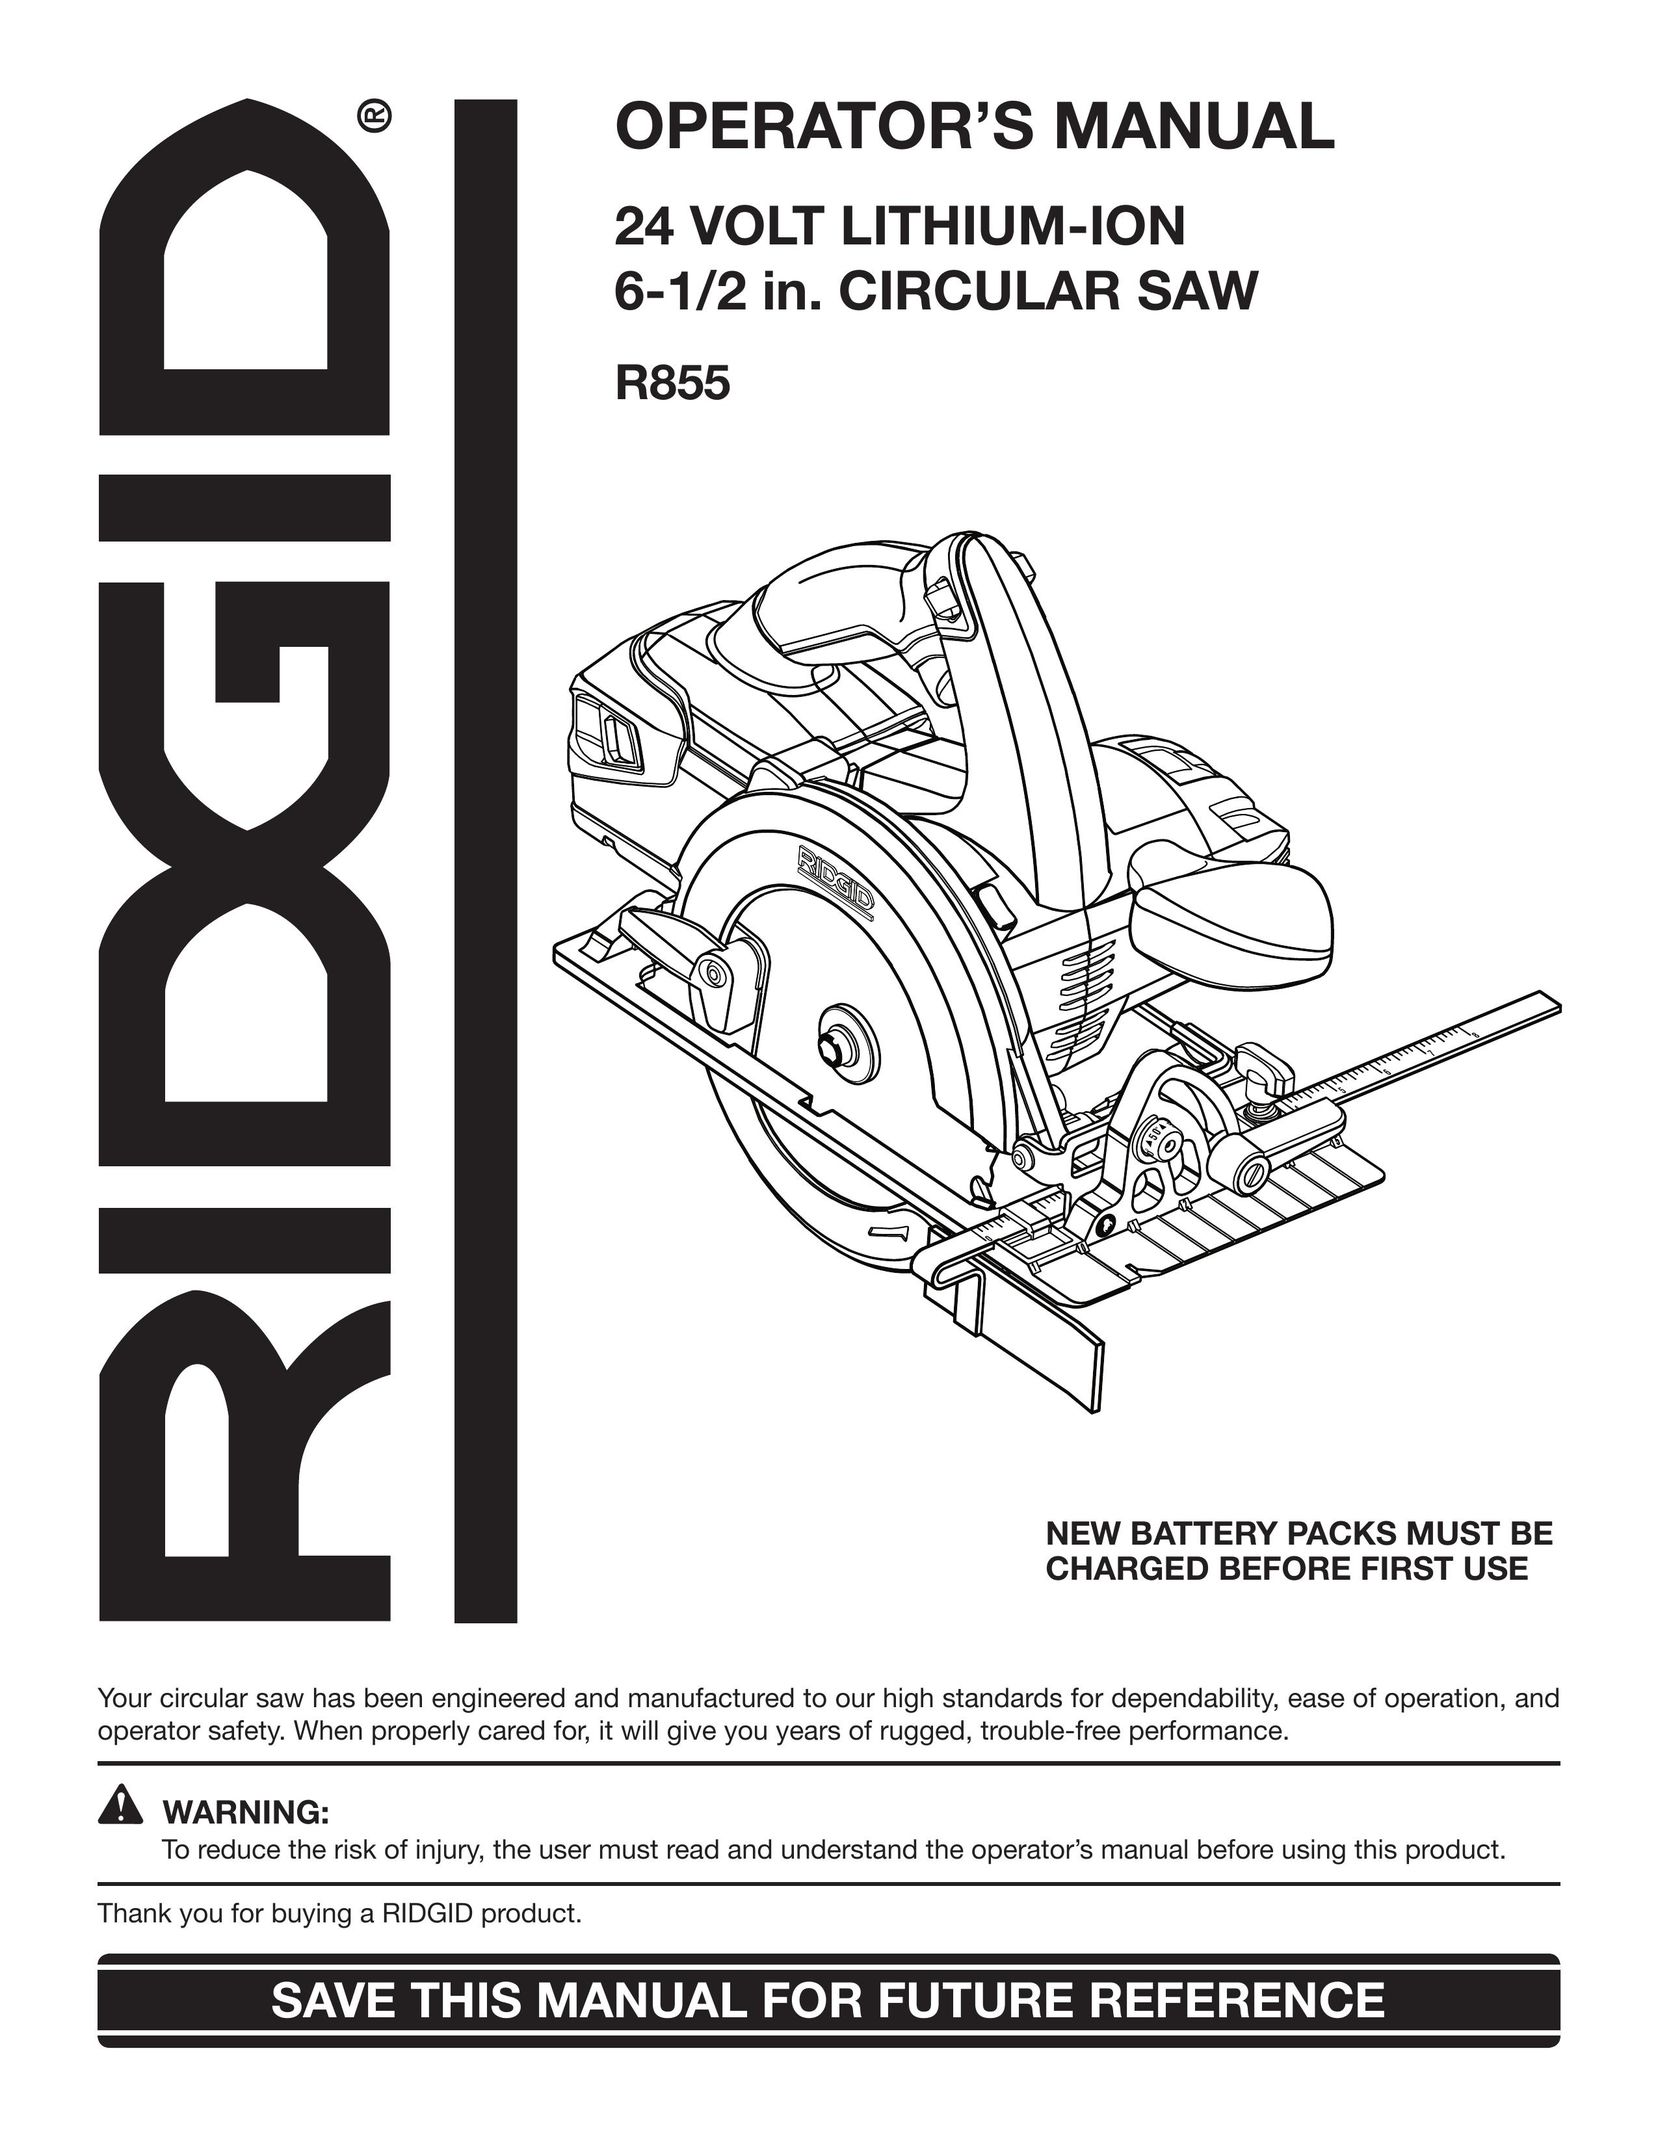 RIDGID R855 Saw User Manual